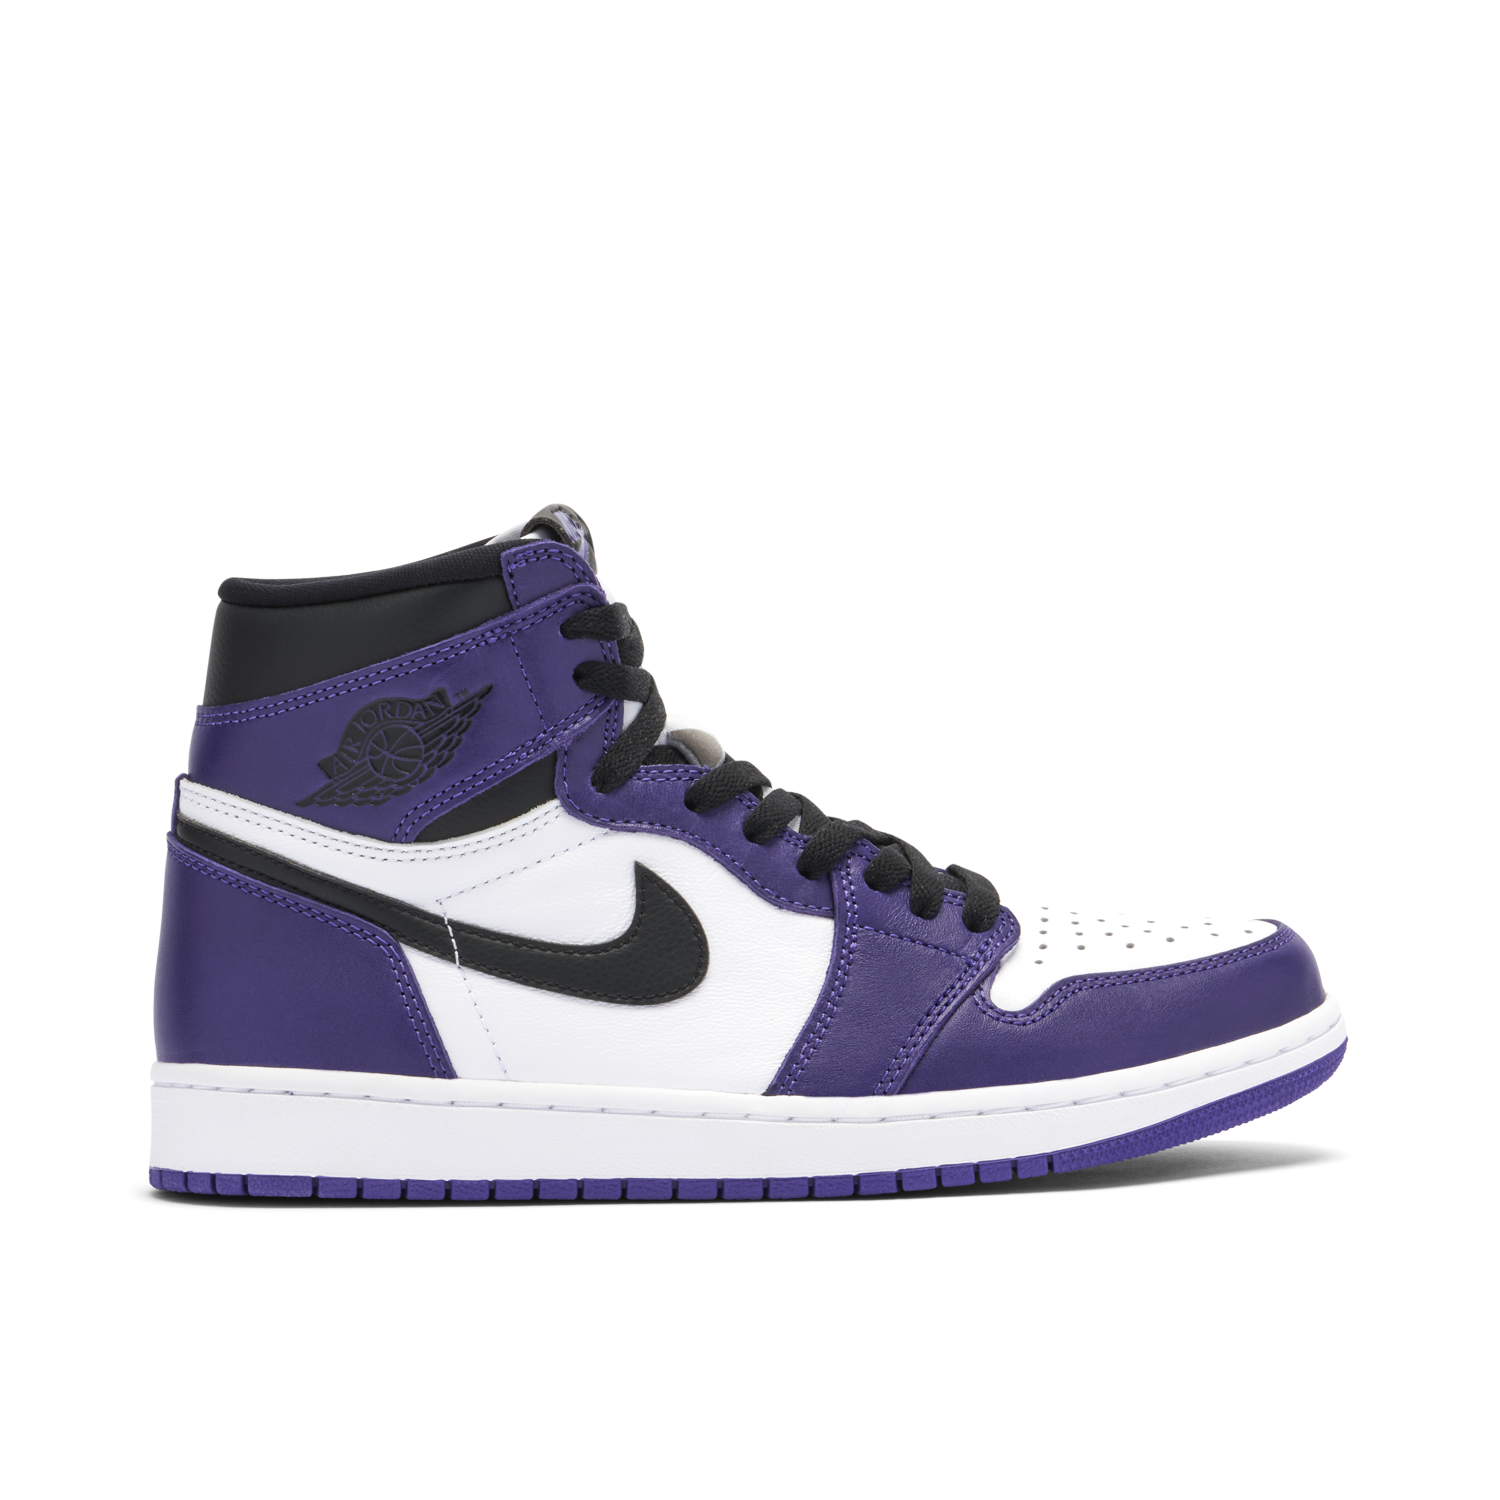 Alcanzar Barry Esta llorando Purple Jordans | New Purple Air Jordans From Nike